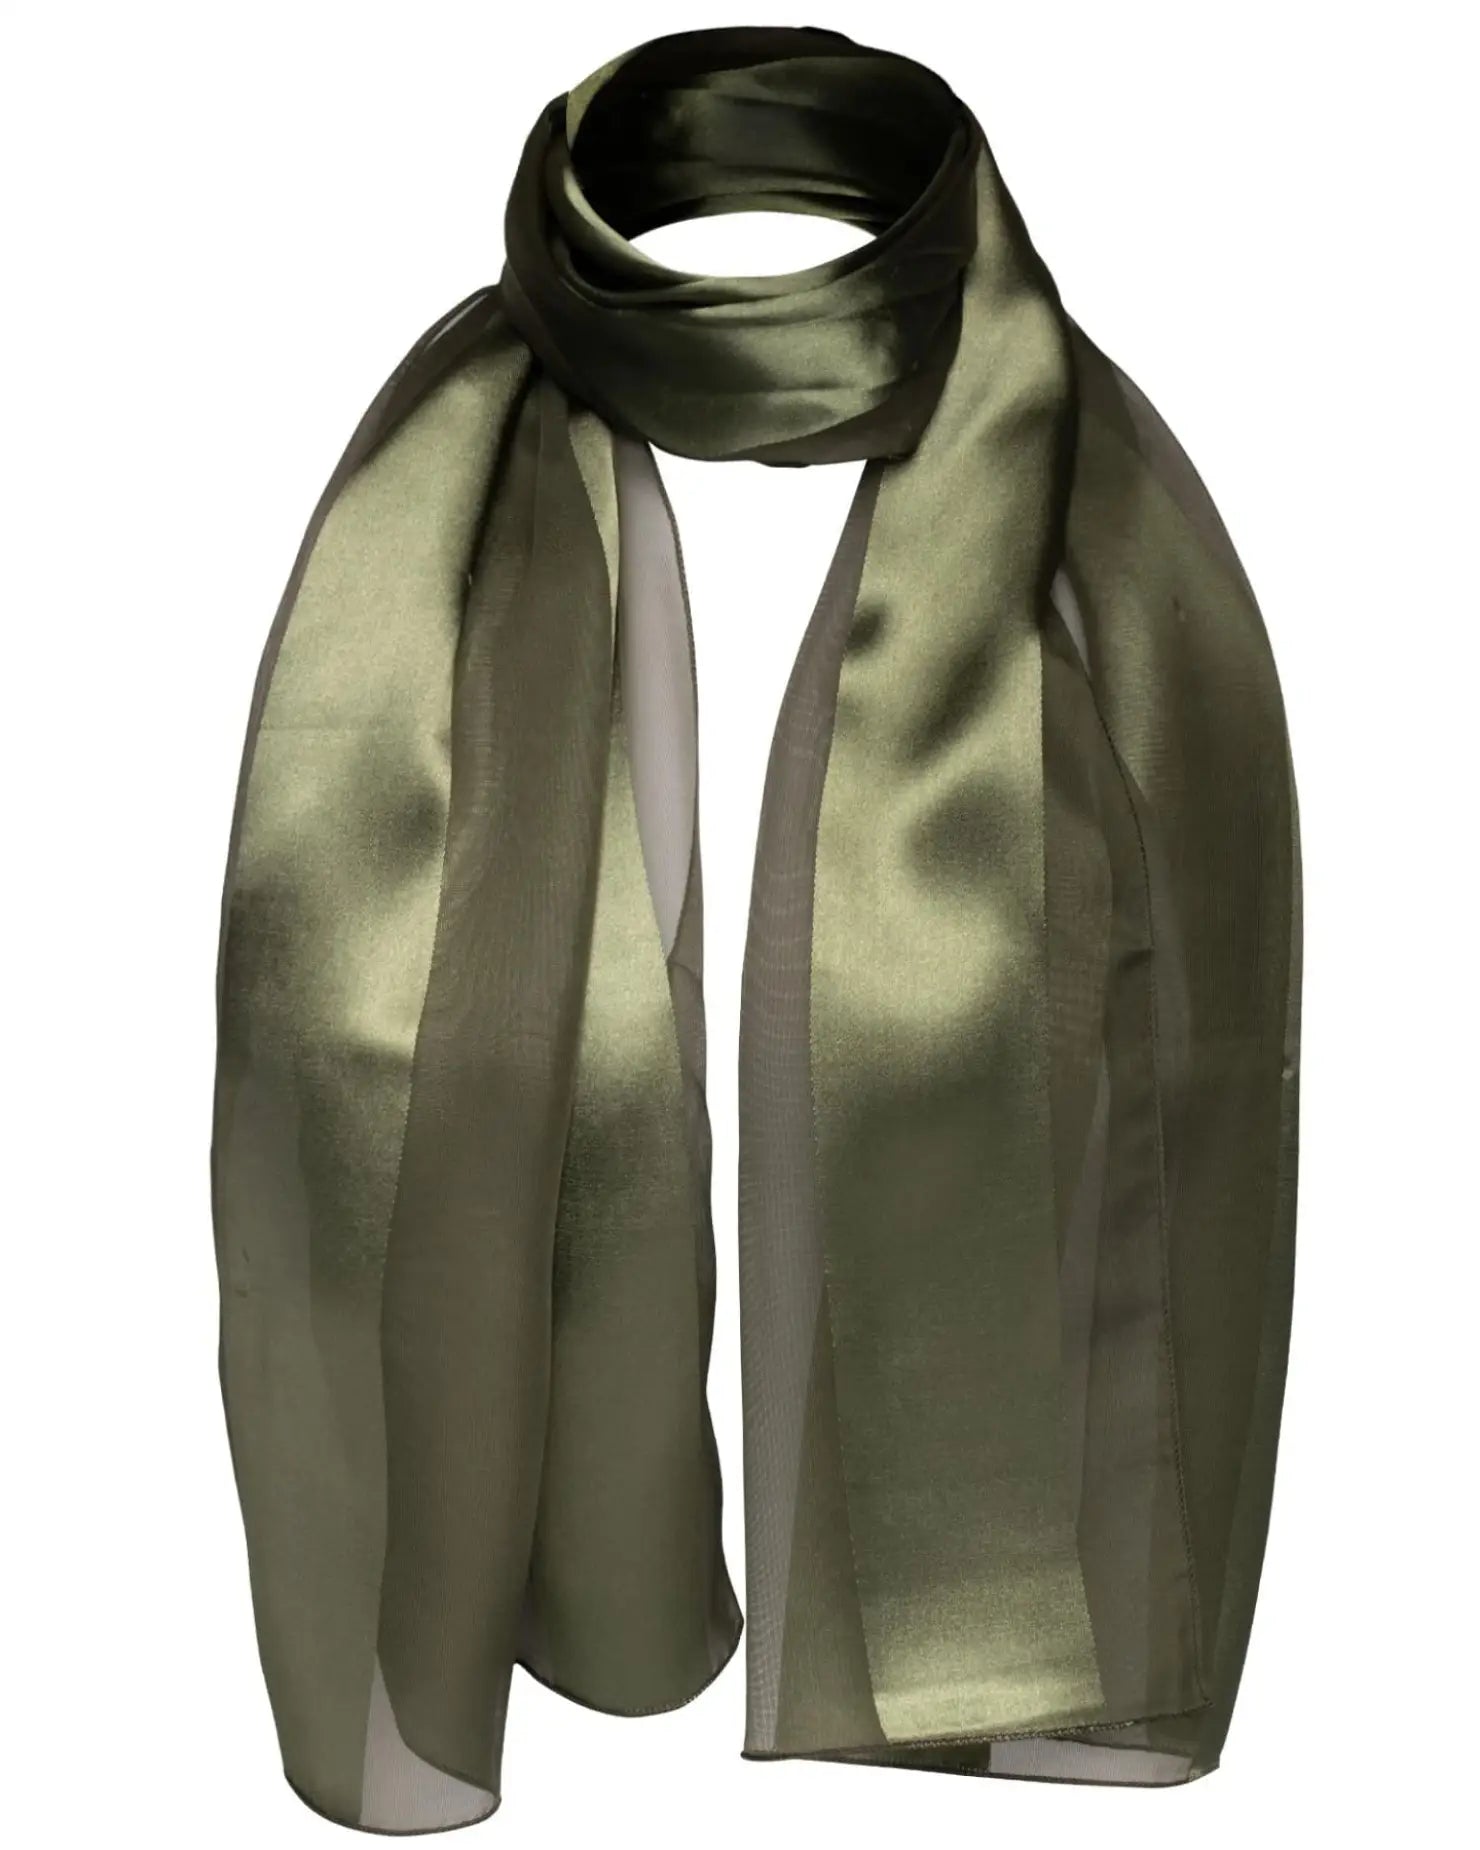 Green satin stripe scarf with black border